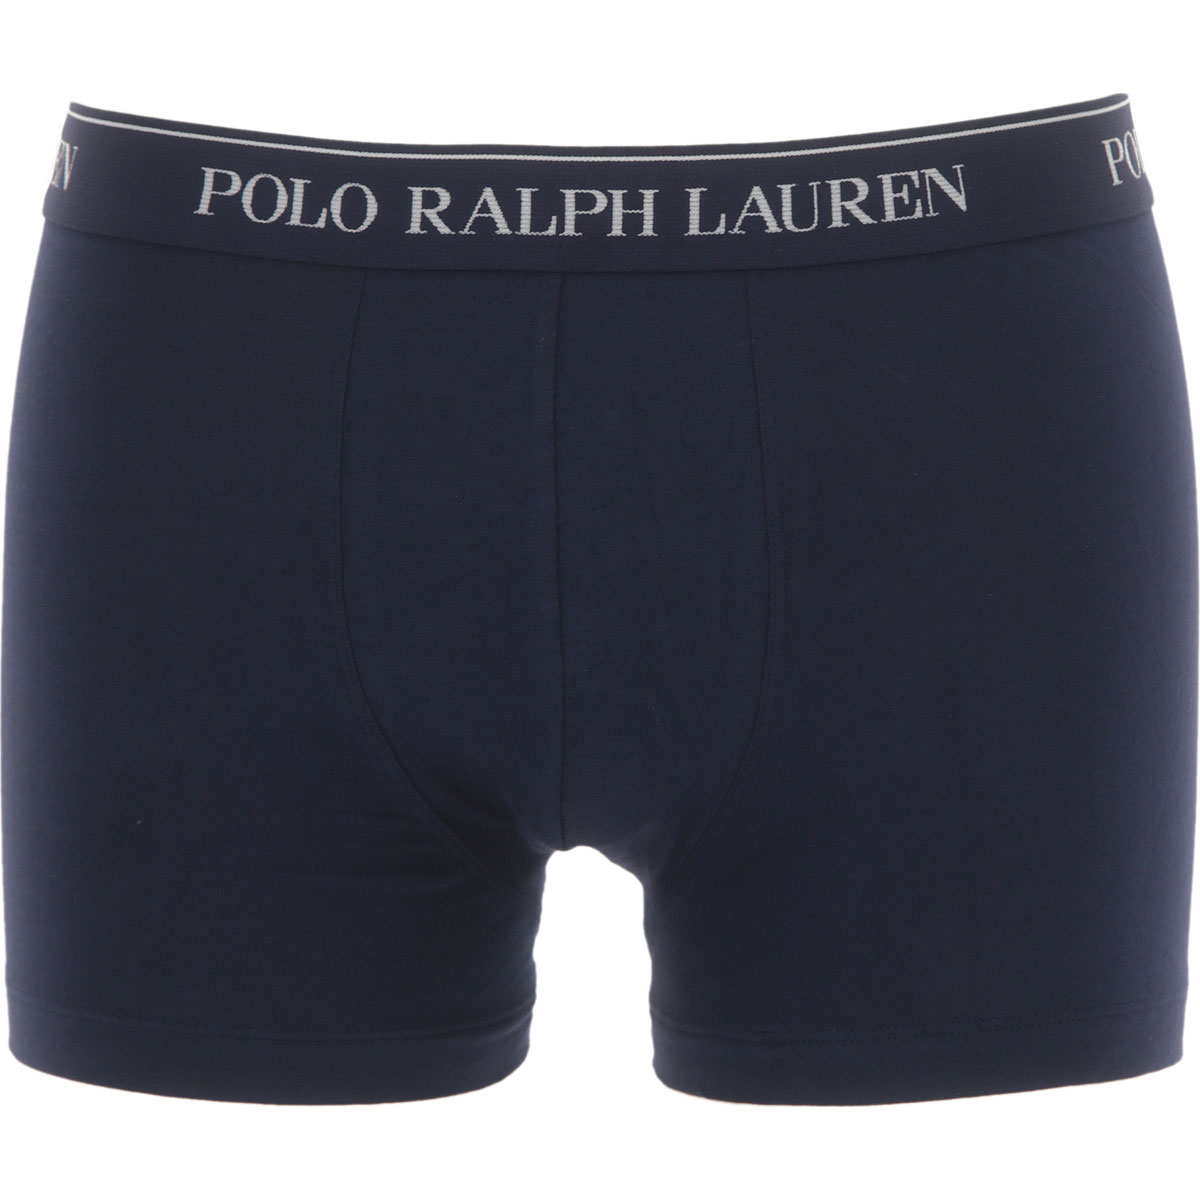 Mens Underwear Ralph Lauren, Style code: 714835885004--